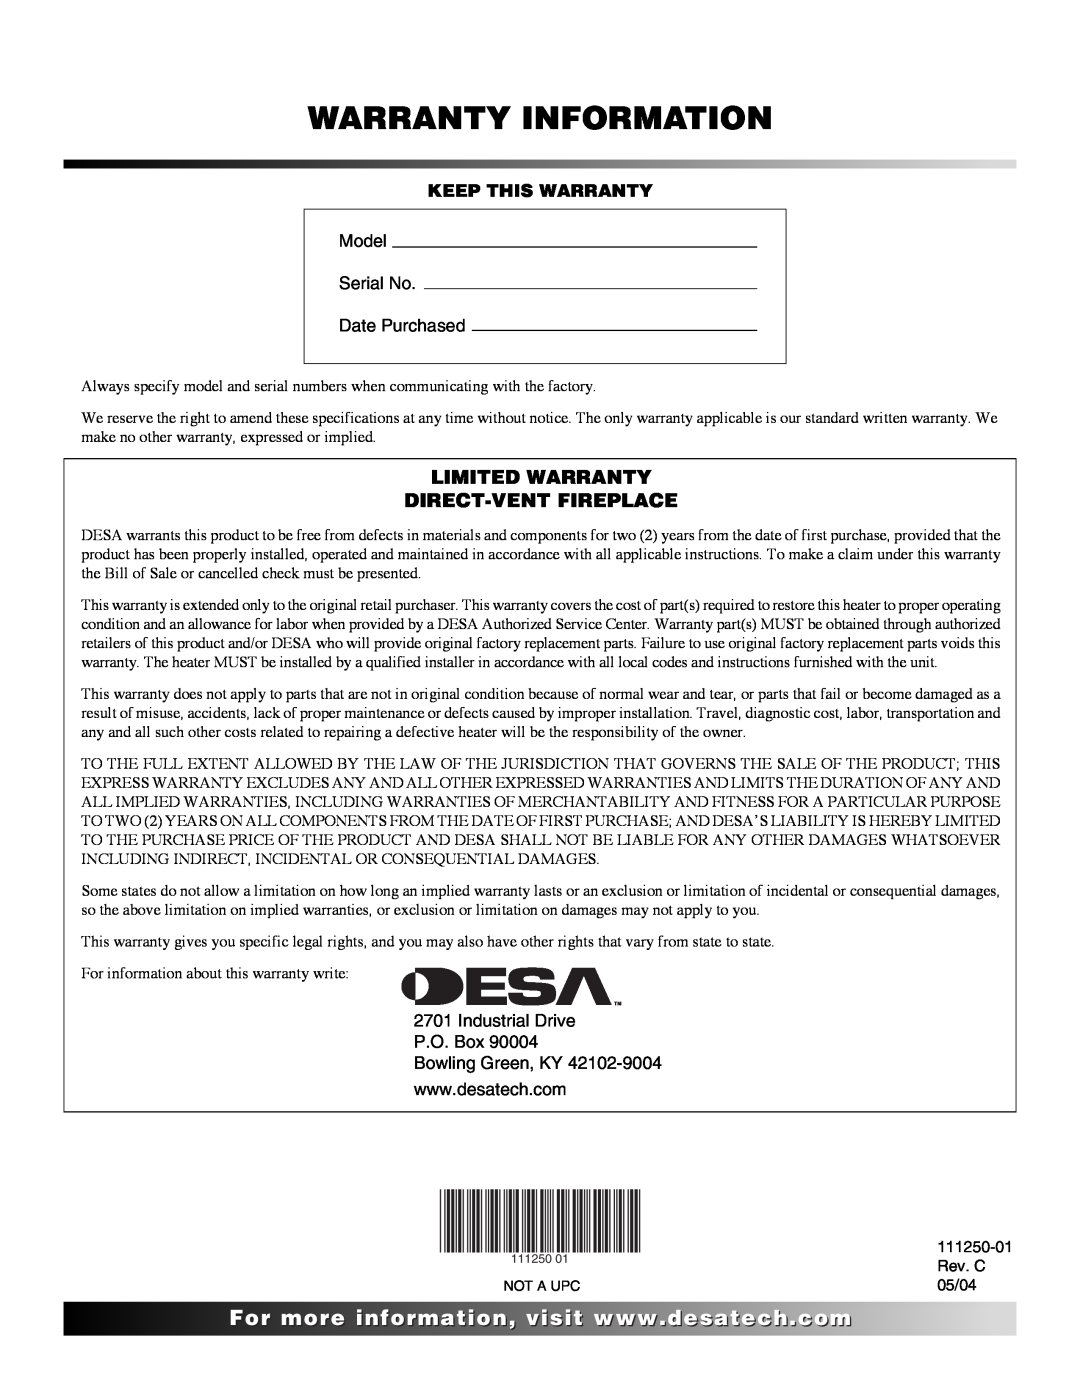 Desa (V)T36NA SERIES installation manual Warranty Information, Limited Warranty Direct-Ventfireplace 